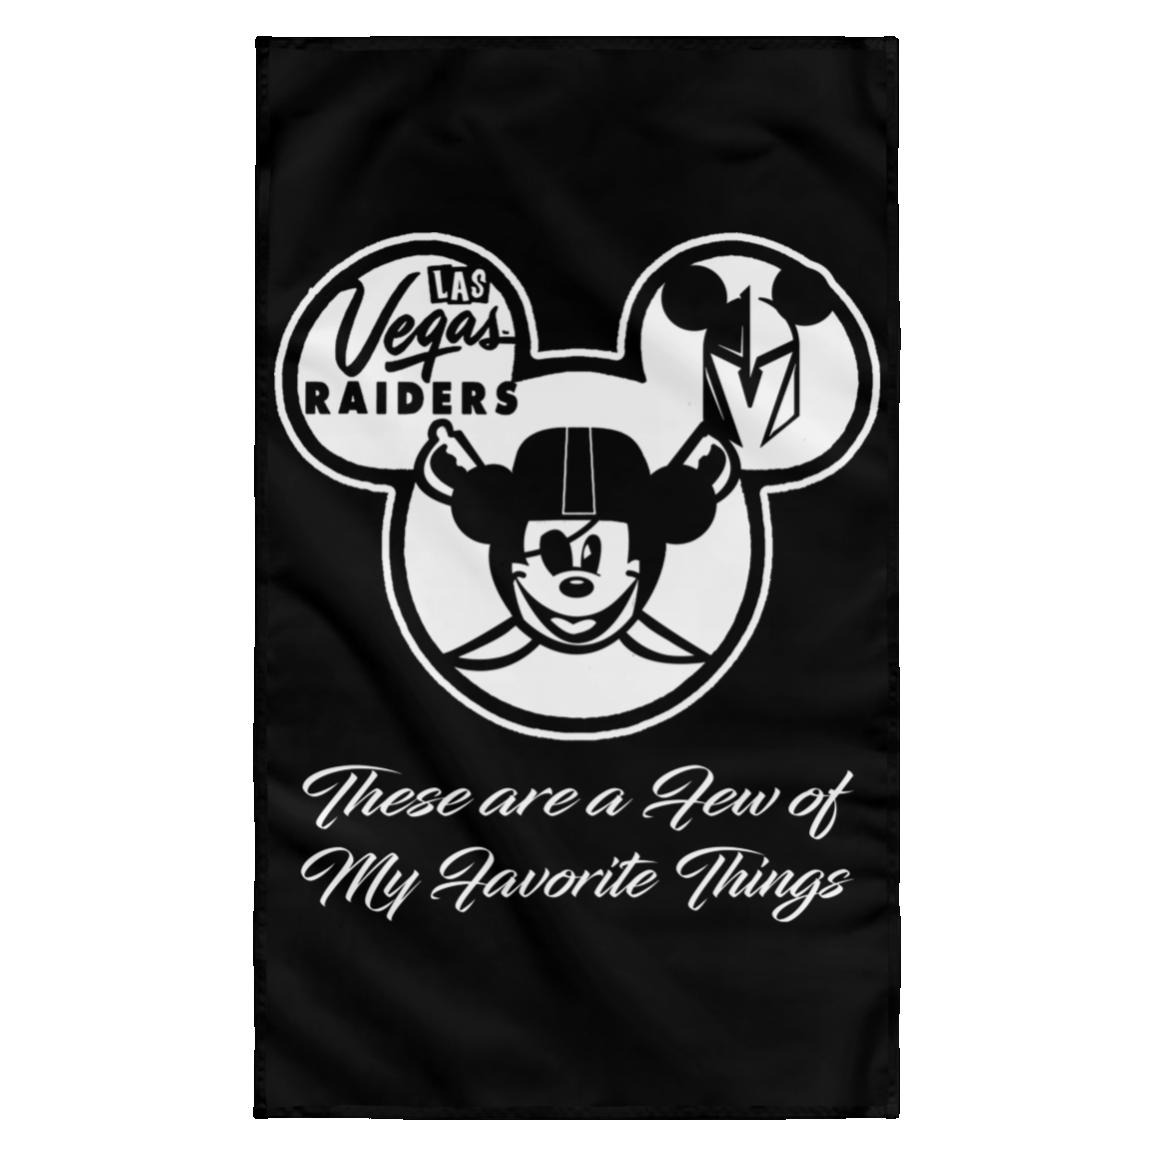 ArtichokeUSA Custom Design. Las Vegas Raiders & Mickey Mouse Mash Up. Fan Art. Parody. Wall Flag